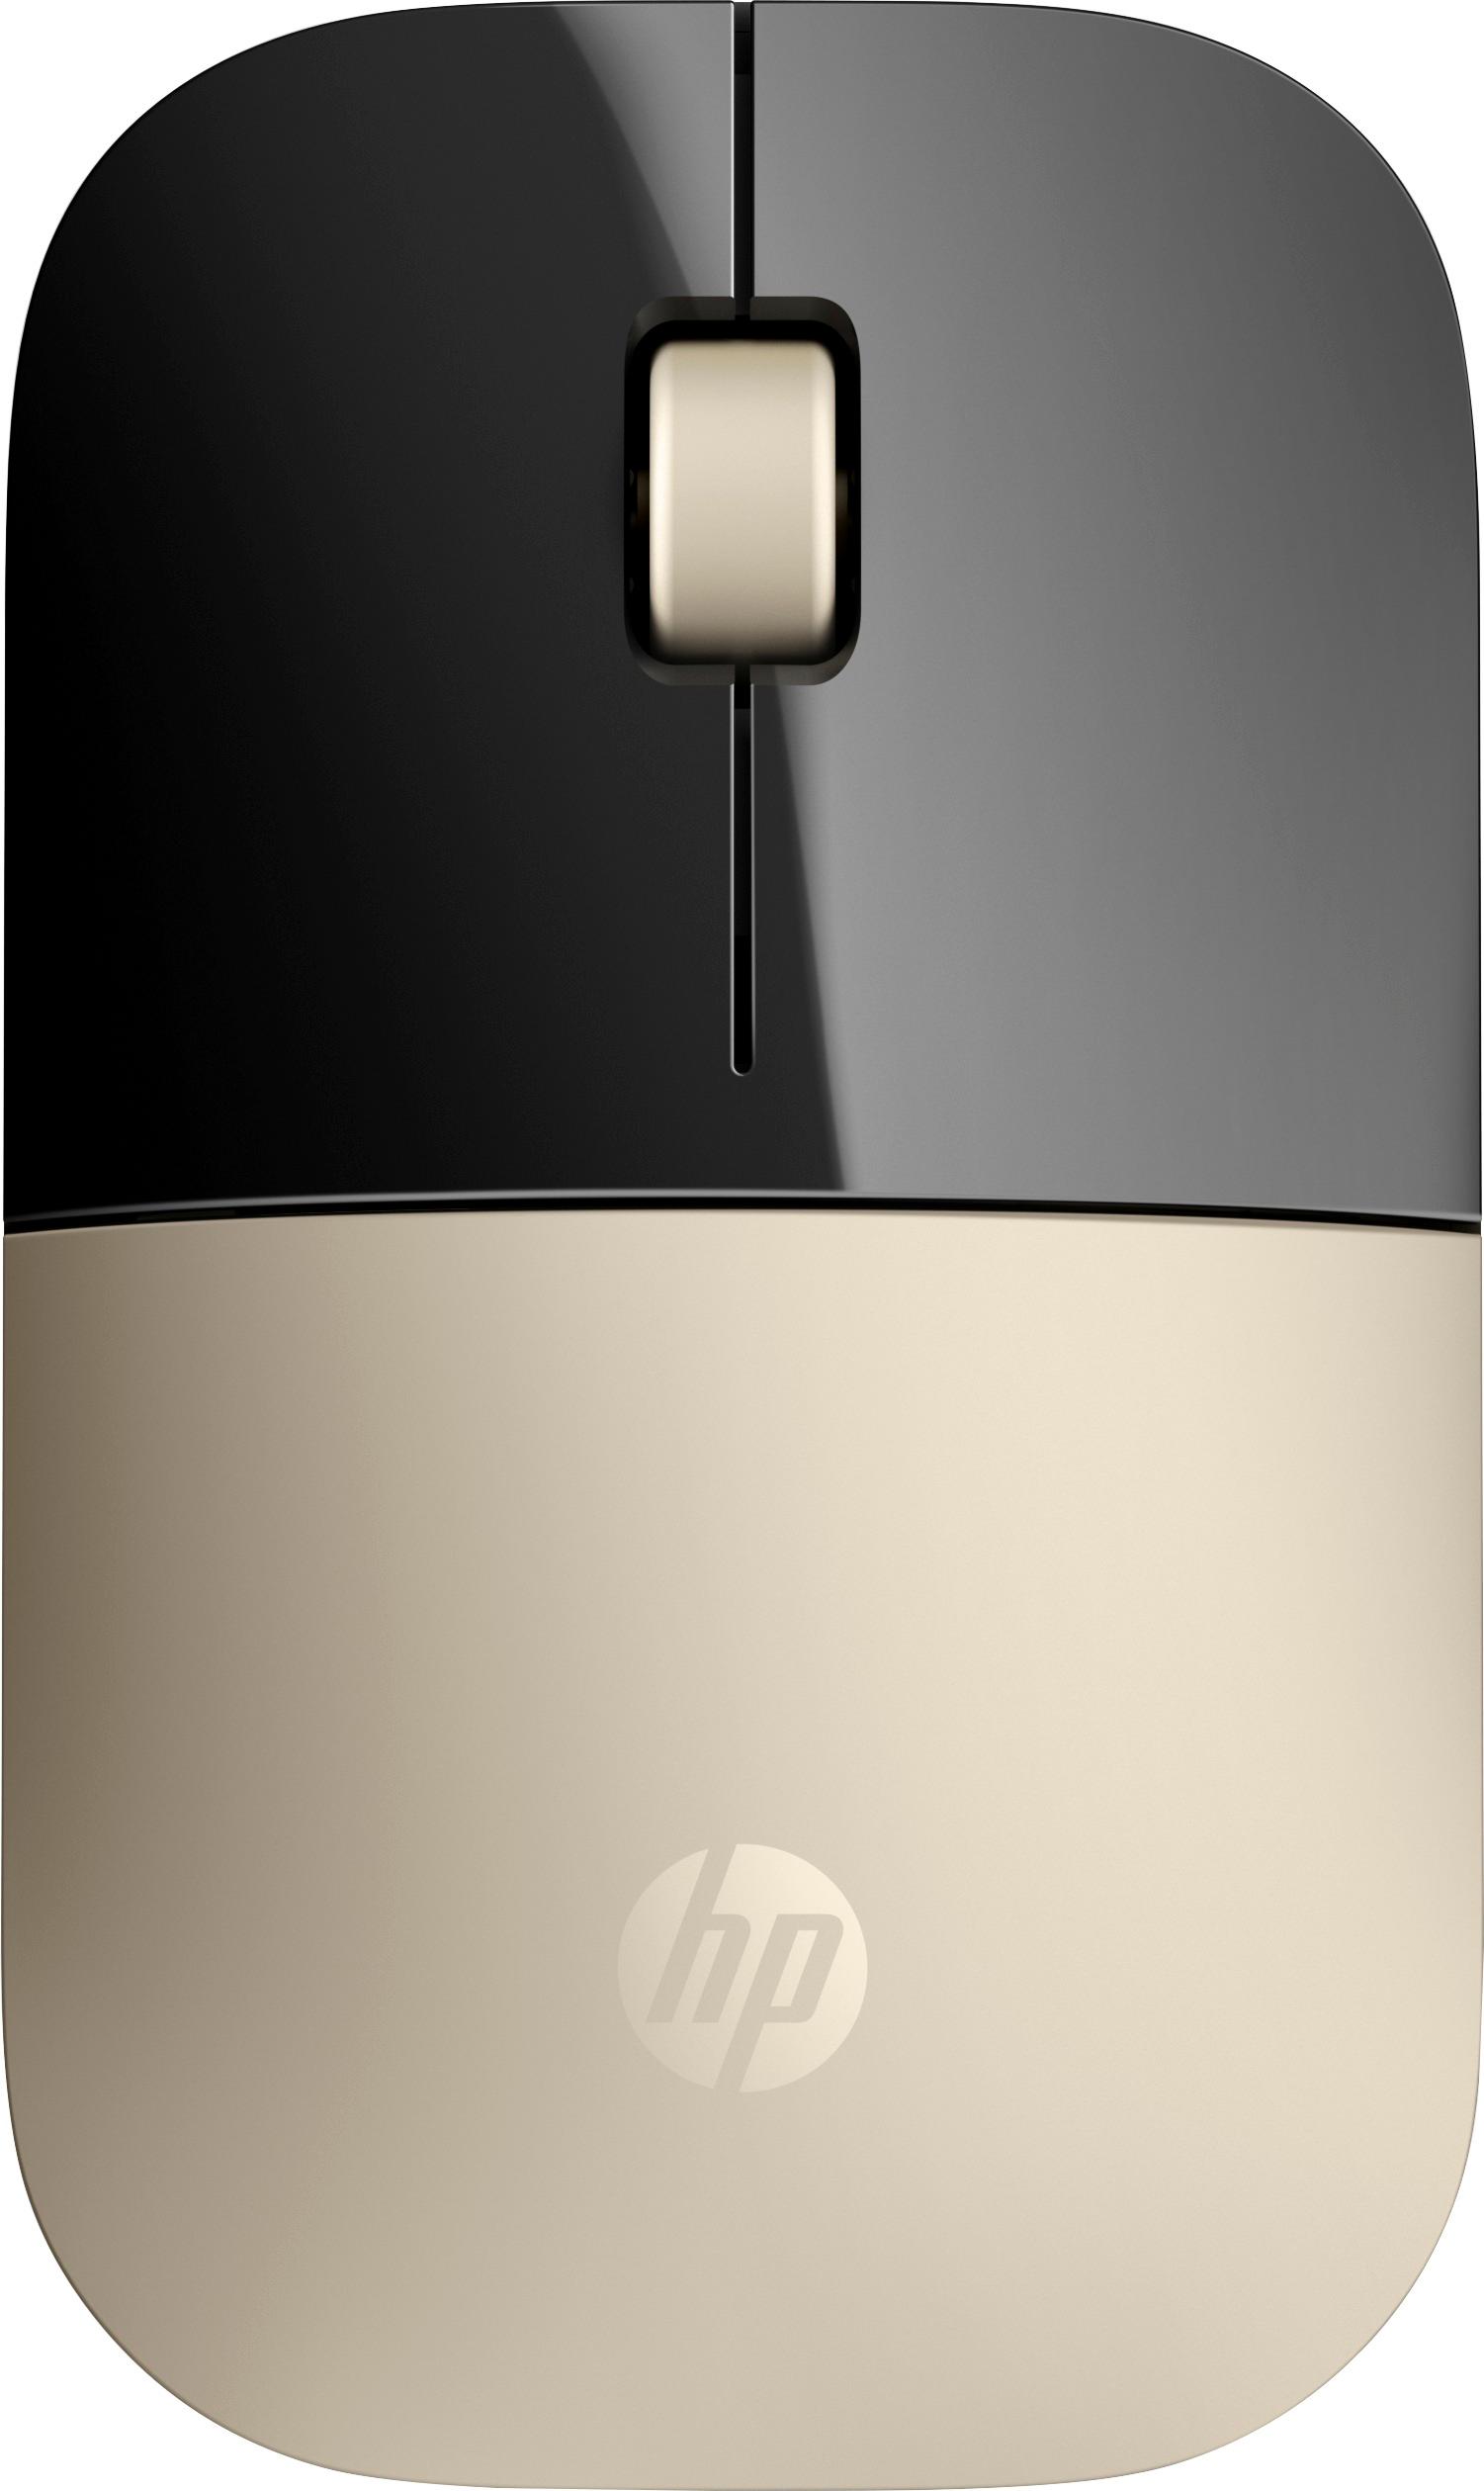 HP Z3700 Wireless Blue LED Mouse Gold X7Q43AA#ABL Z3700 - Best Buy